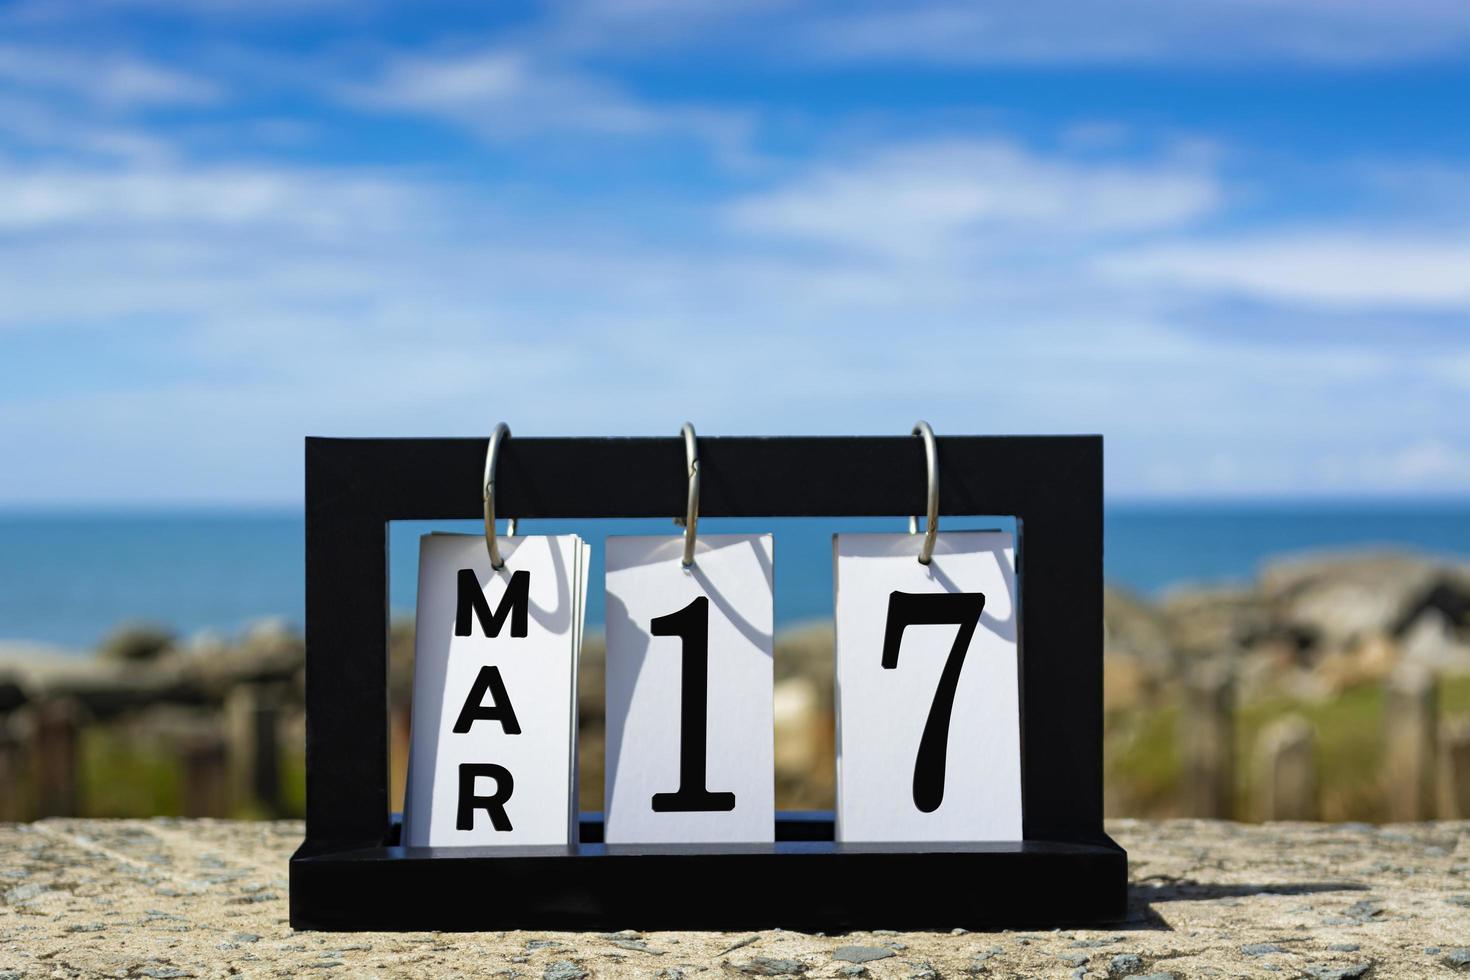 mar 17 calendario fecha texto en marco de madera con fondo borroso del océano. foto